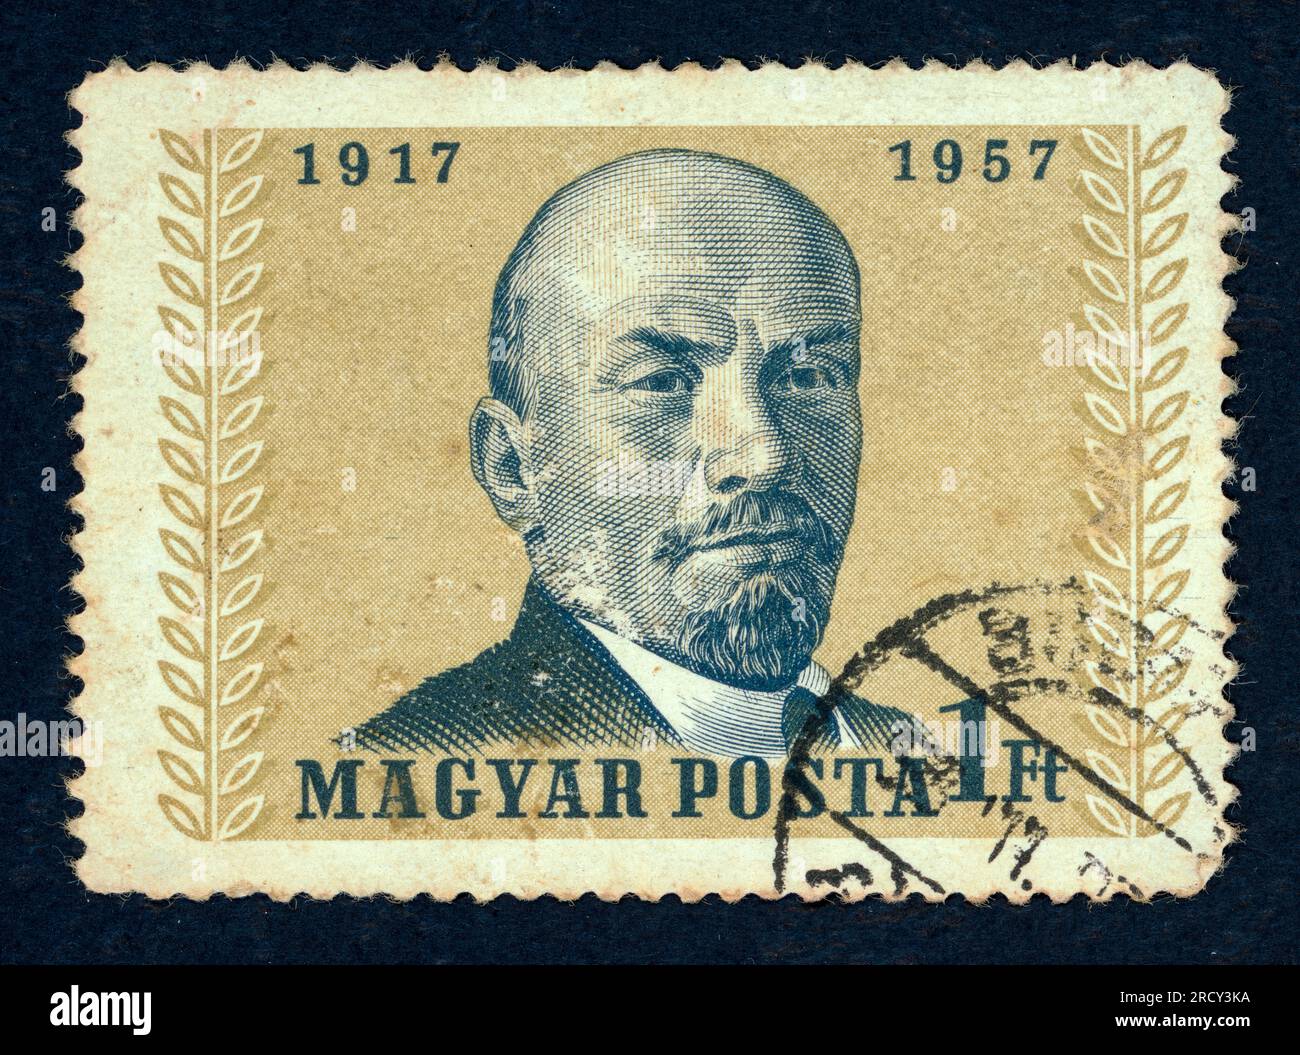 Vladimir Lenin. 40th Anniversary of the Bolshevik Revolution. Issued in 1957. Magyar Posta (Hungarian Post). Face Value: 1 Ft (one Hungarian Forint). Stock Photo